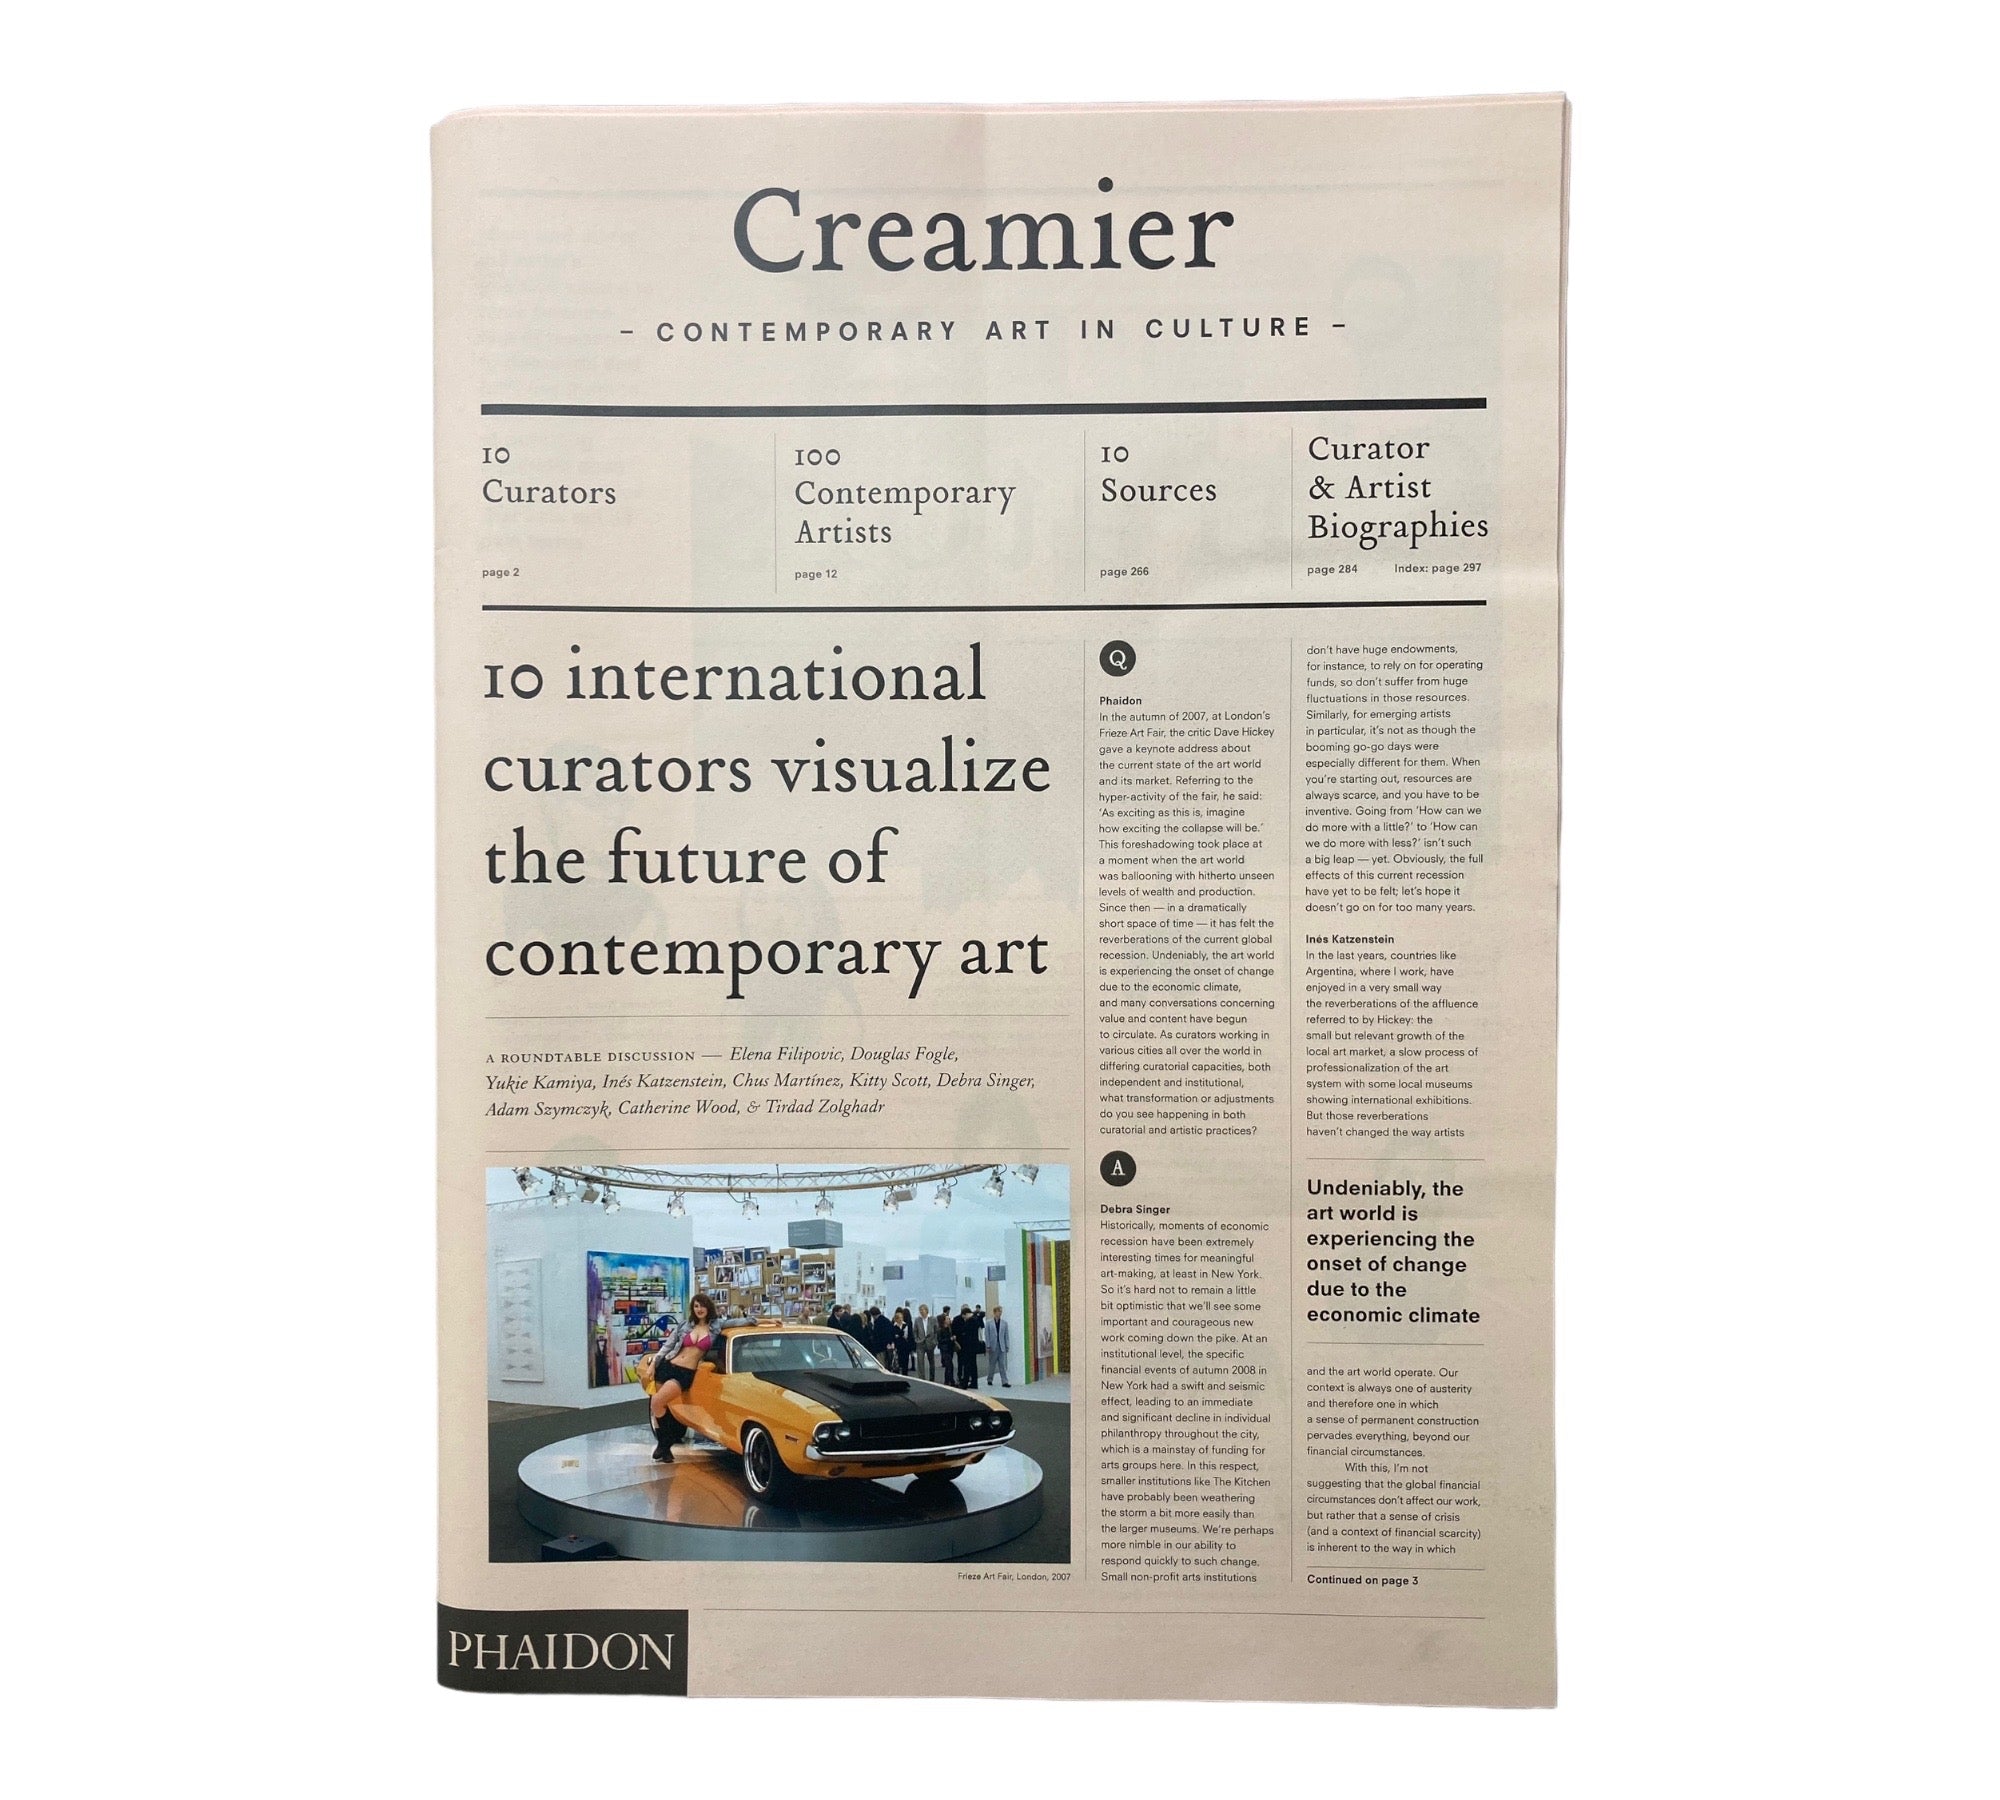 Creamier: Contemporary Art in Culture